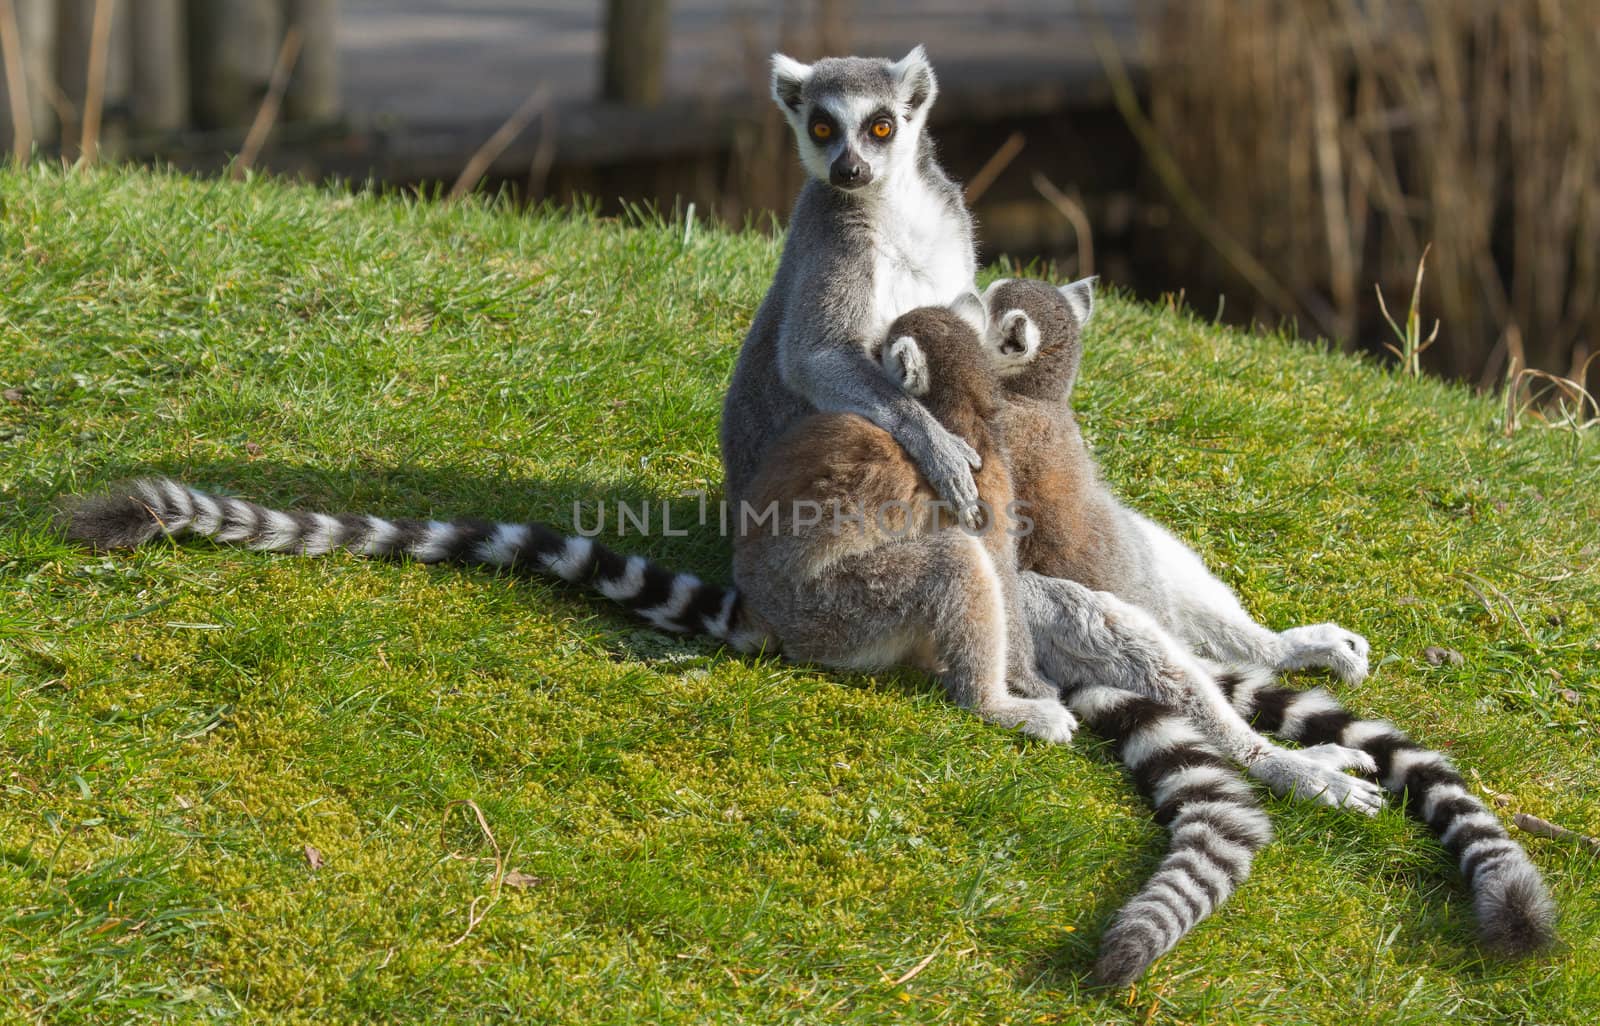 Ring-tailed lemur (Lemur catta)  by michaklootwijk